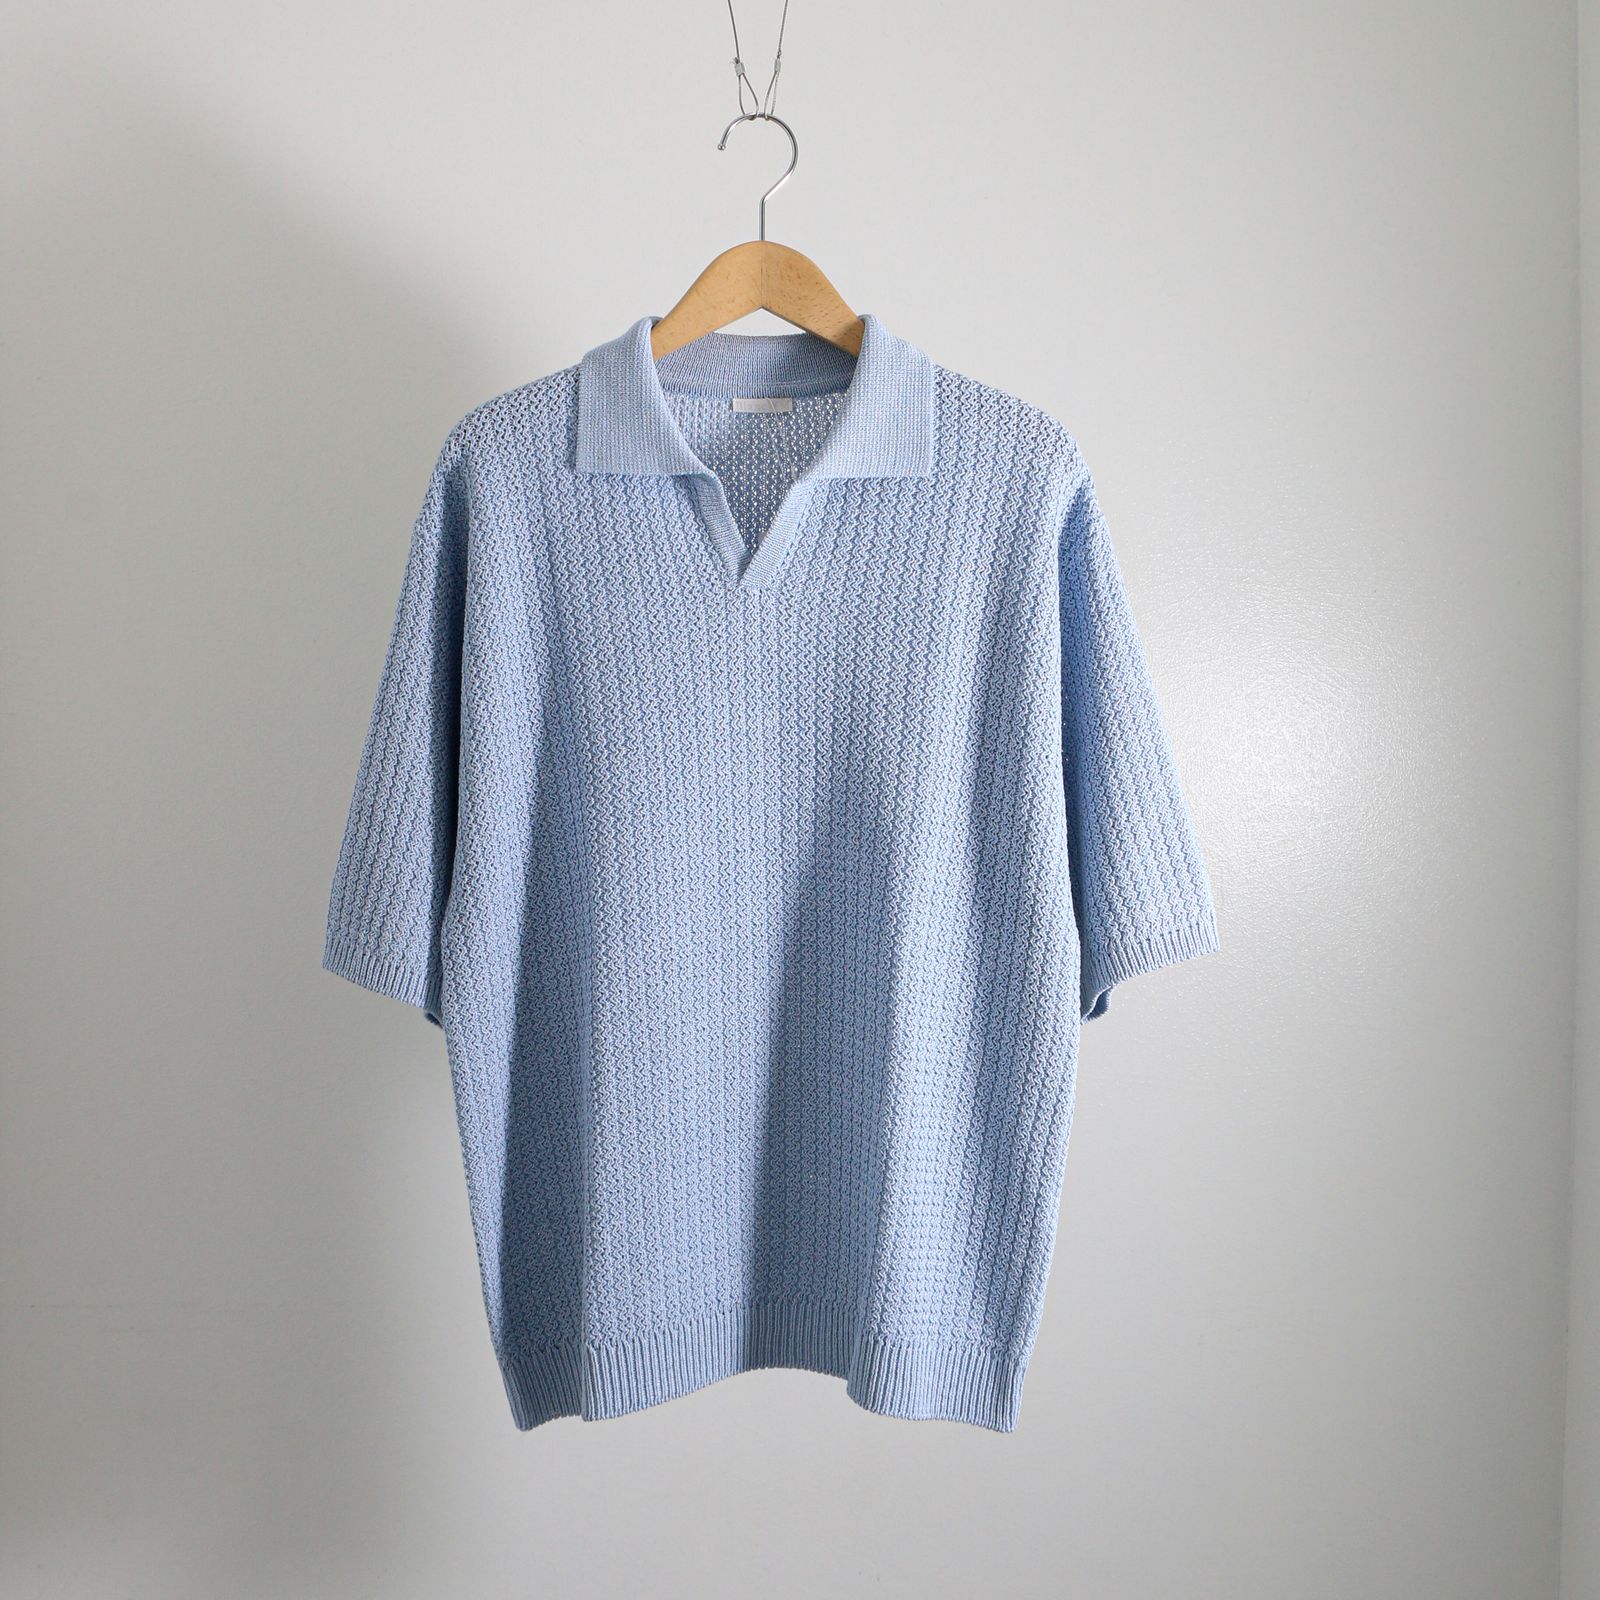 Blanc YM - Skipper knit Shirt BLUE / スキッパー / ニットシャツ 